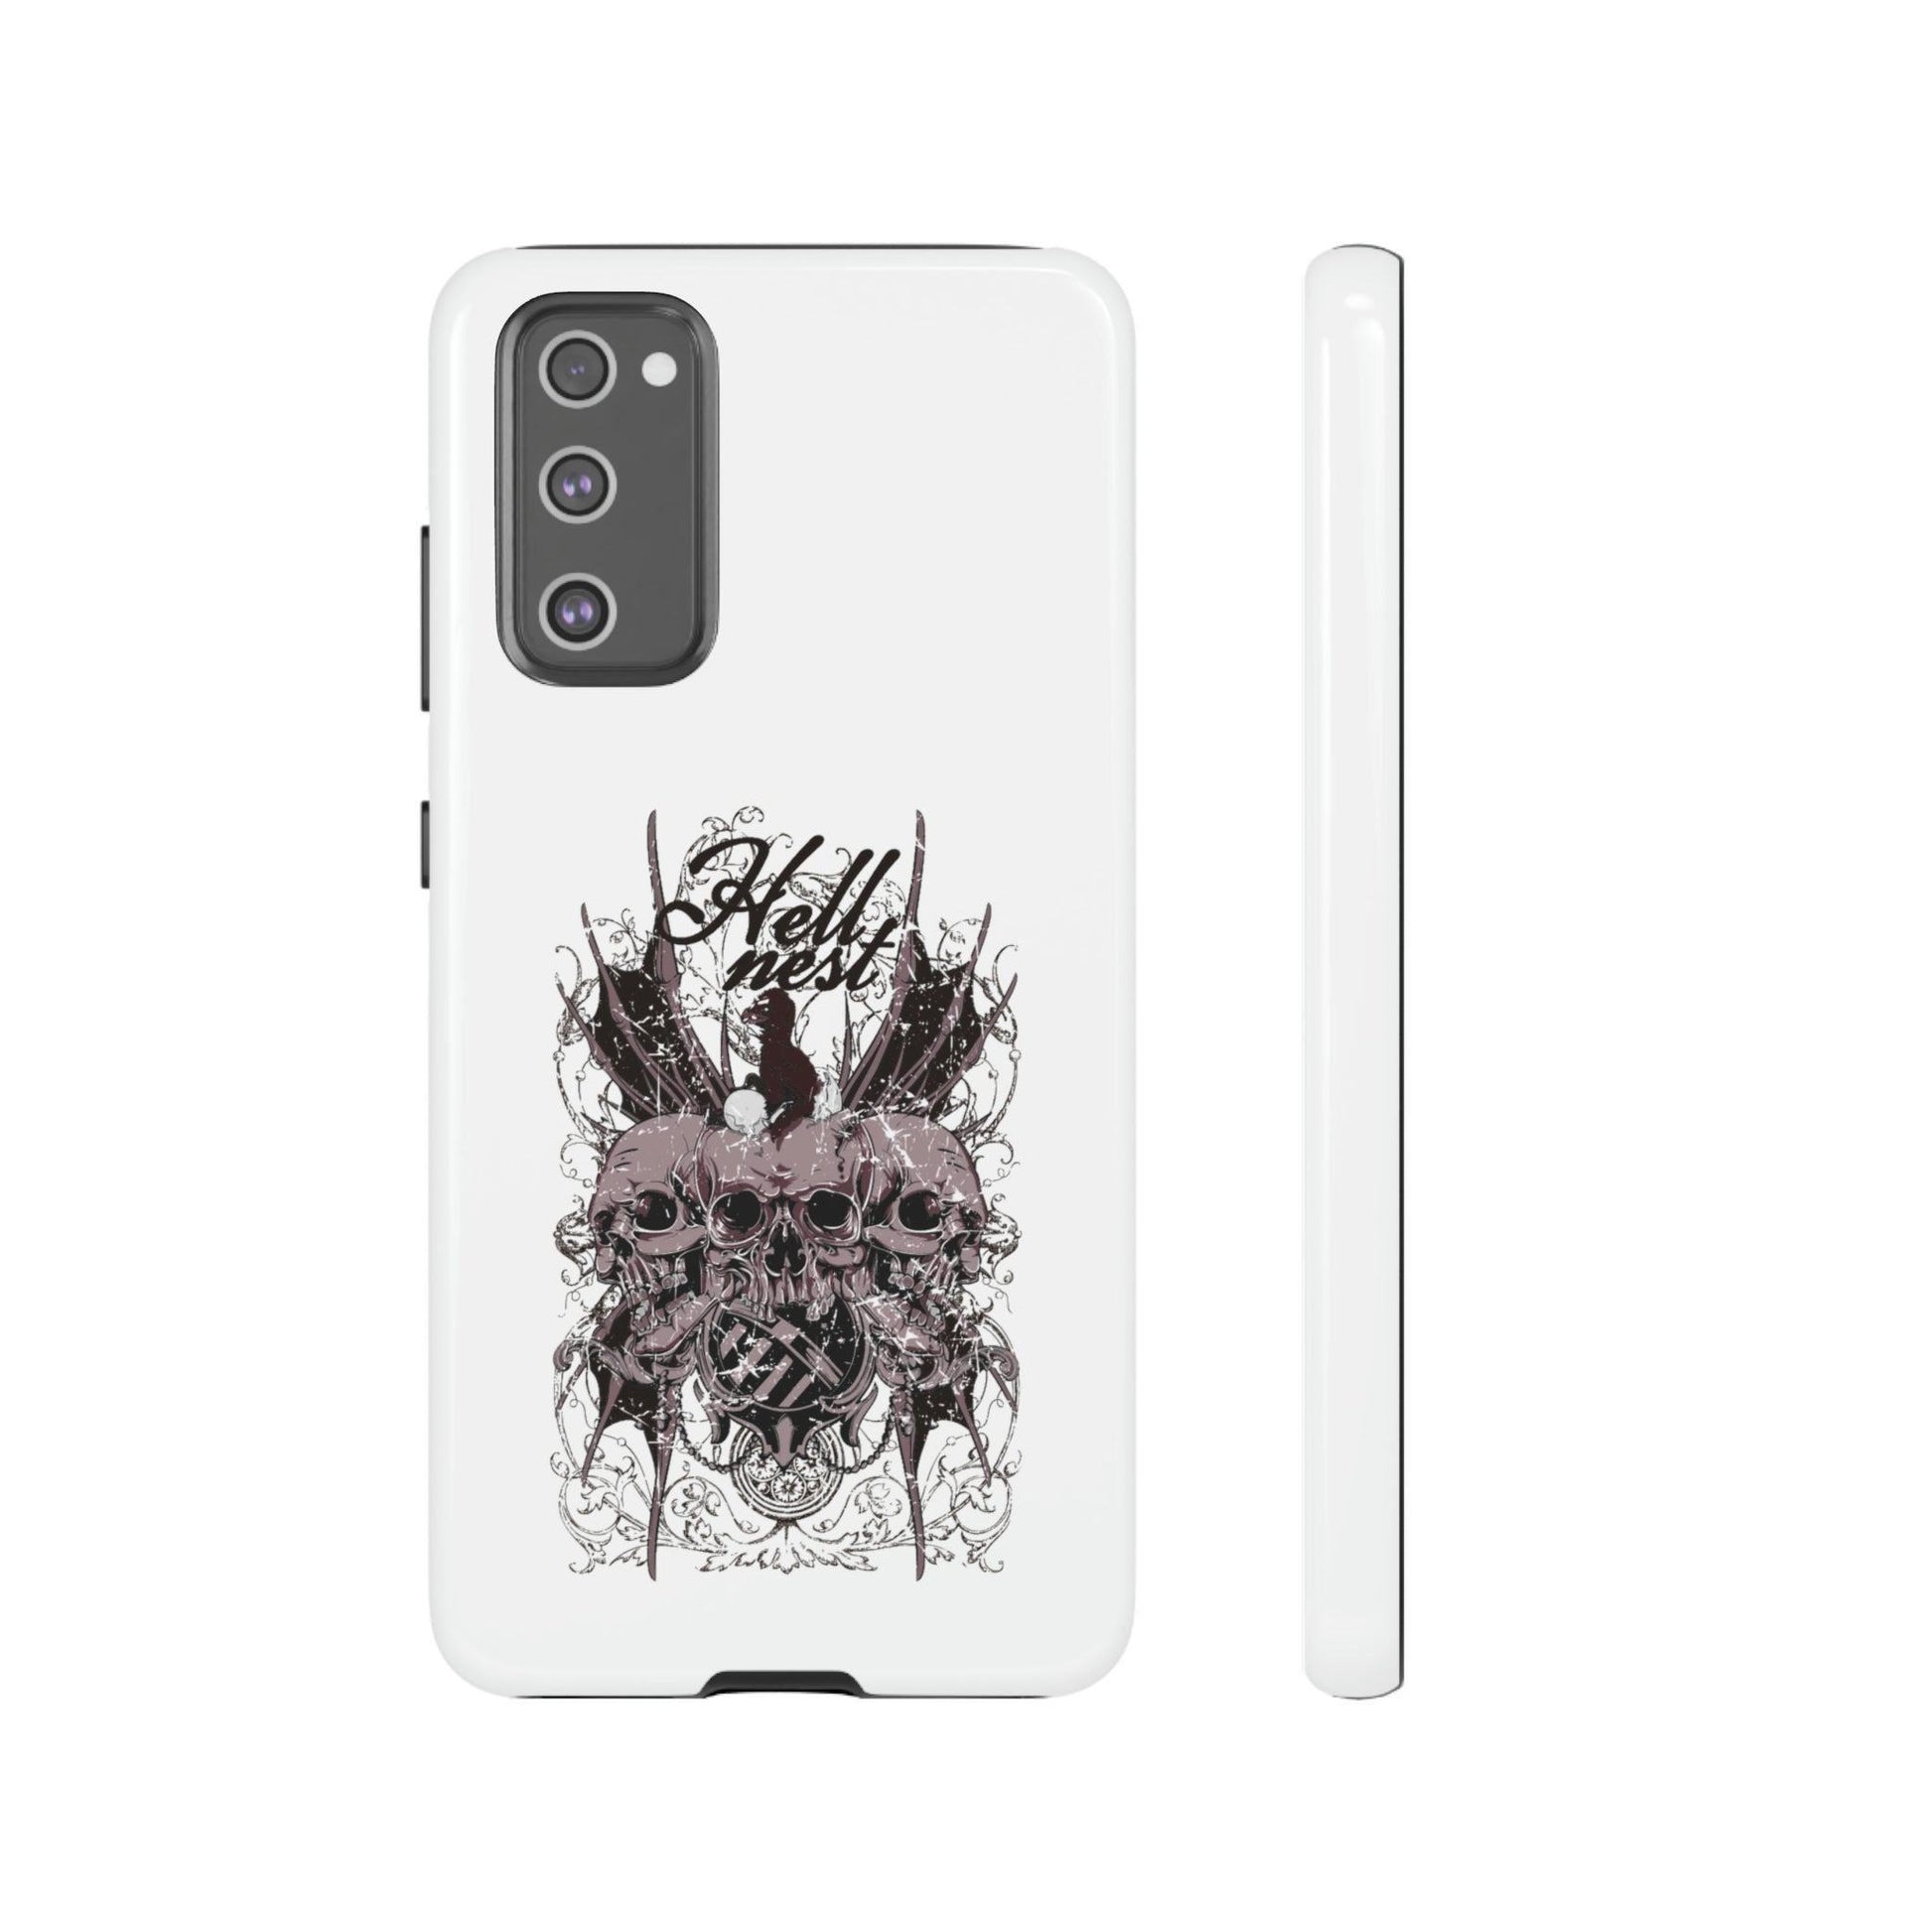 Samsung Galaxy Hells Nest Cover -- Samsung Galaxy Hells Nest Cover - undefined Phone Case | JLR Design